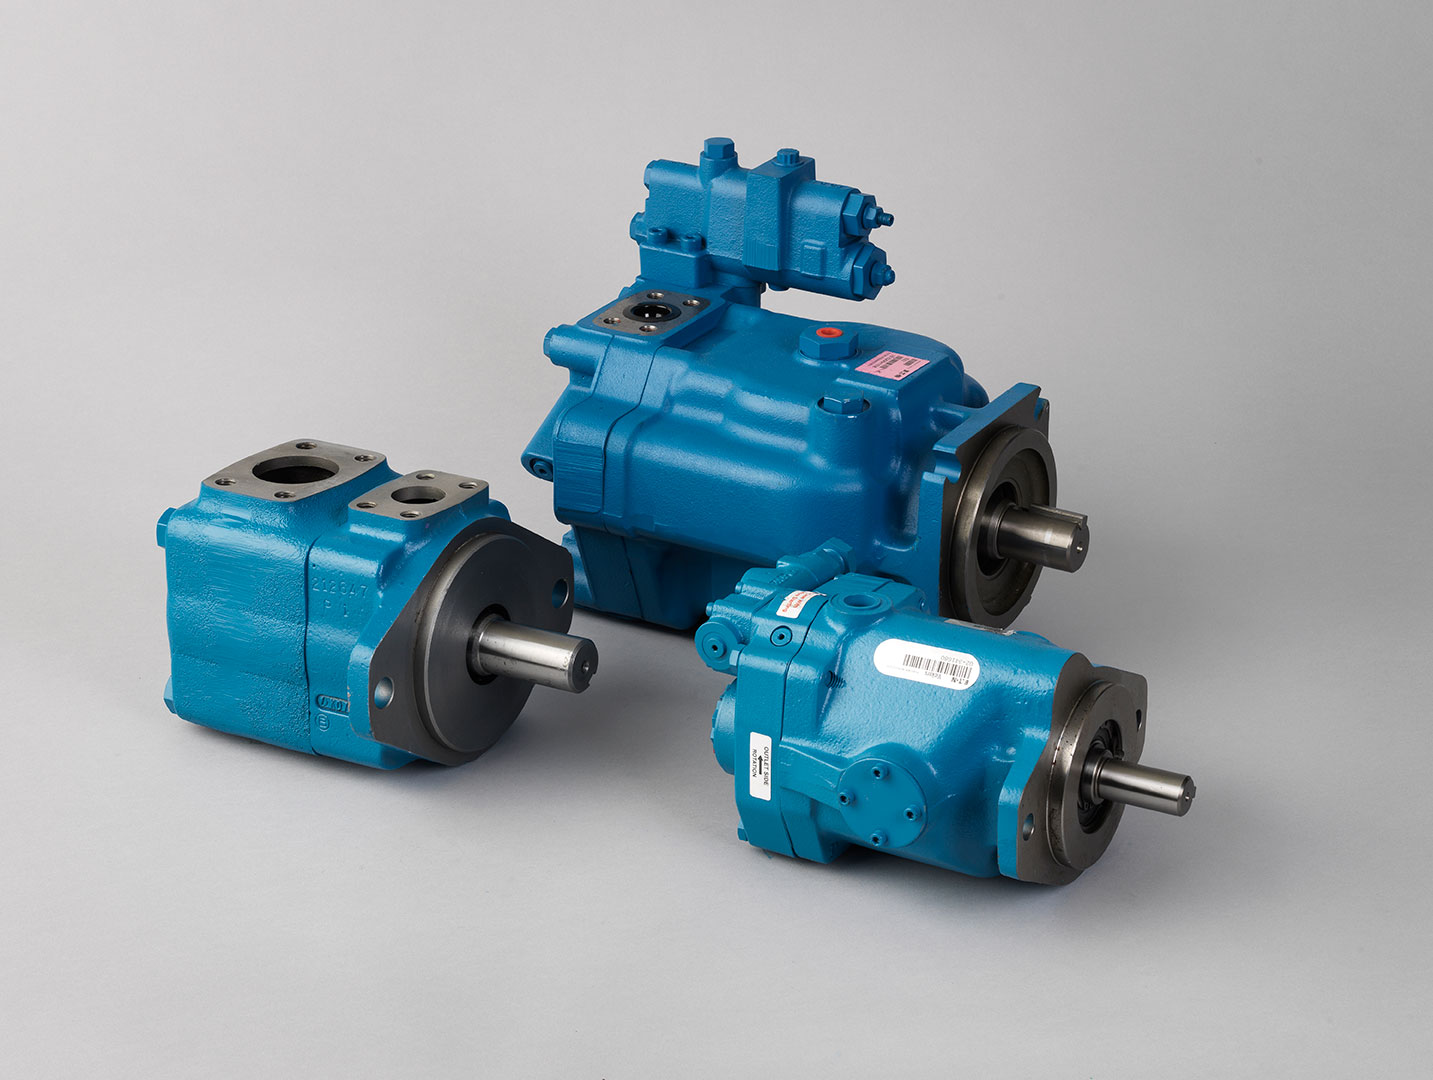 Eaton Vickers hydraulic pumps